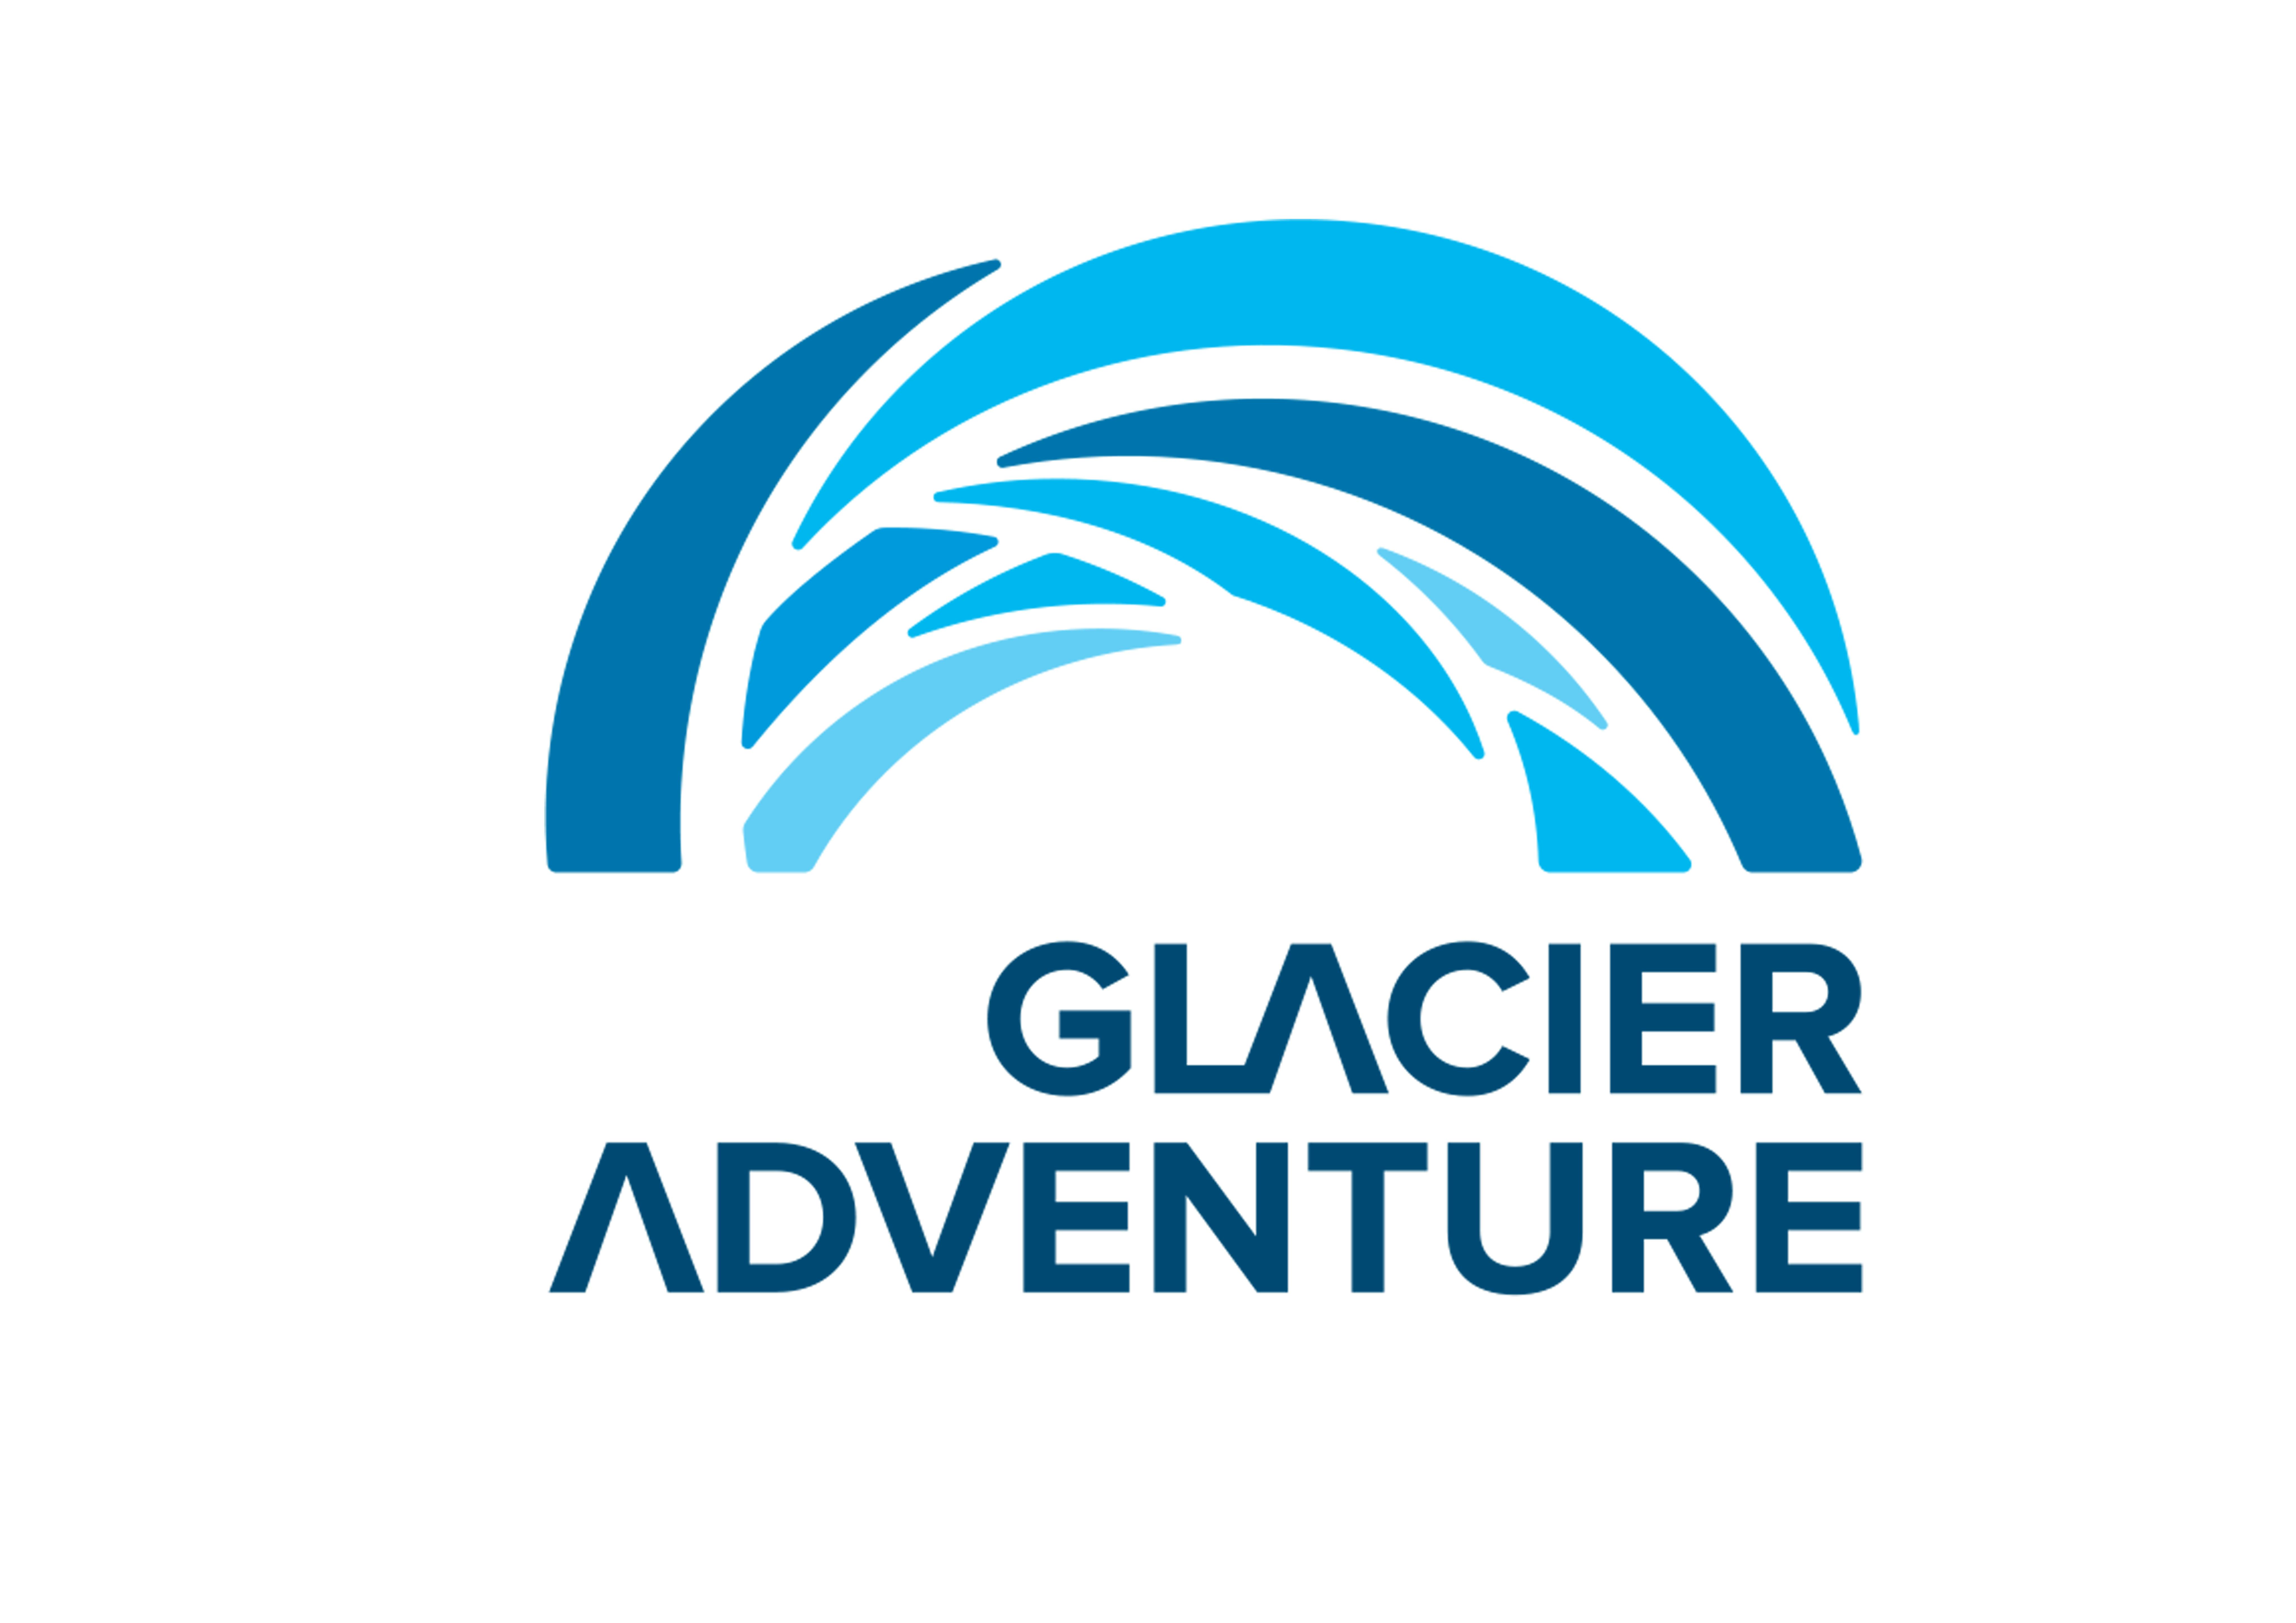 Glacier Adventure logo í lit.jpg